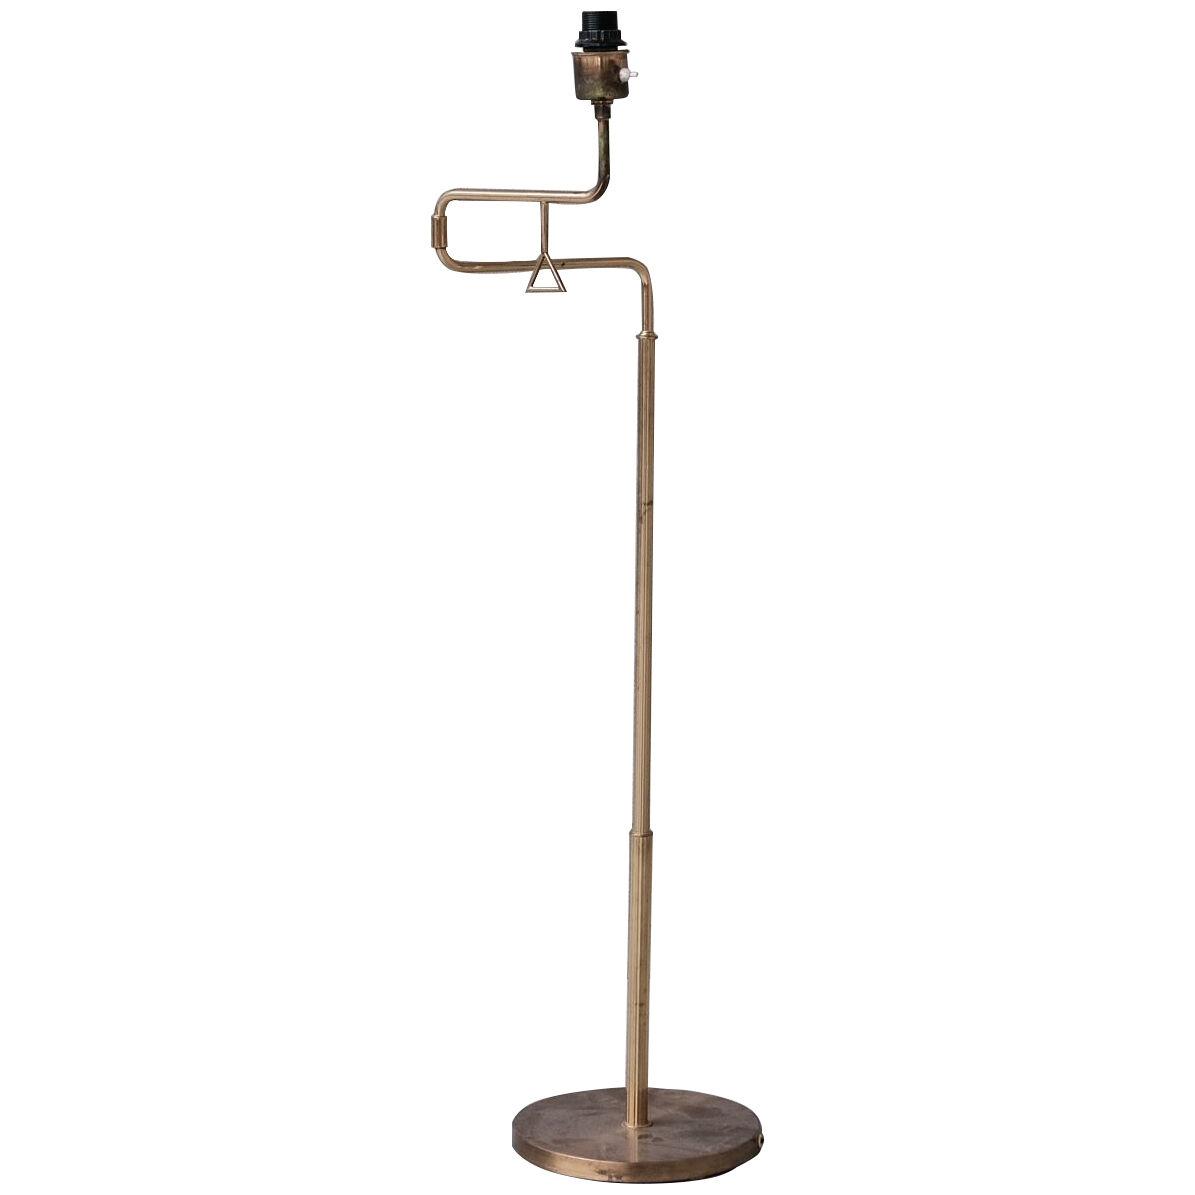 A Swedish Brass Adjustable Swing Arm Floor Lamp